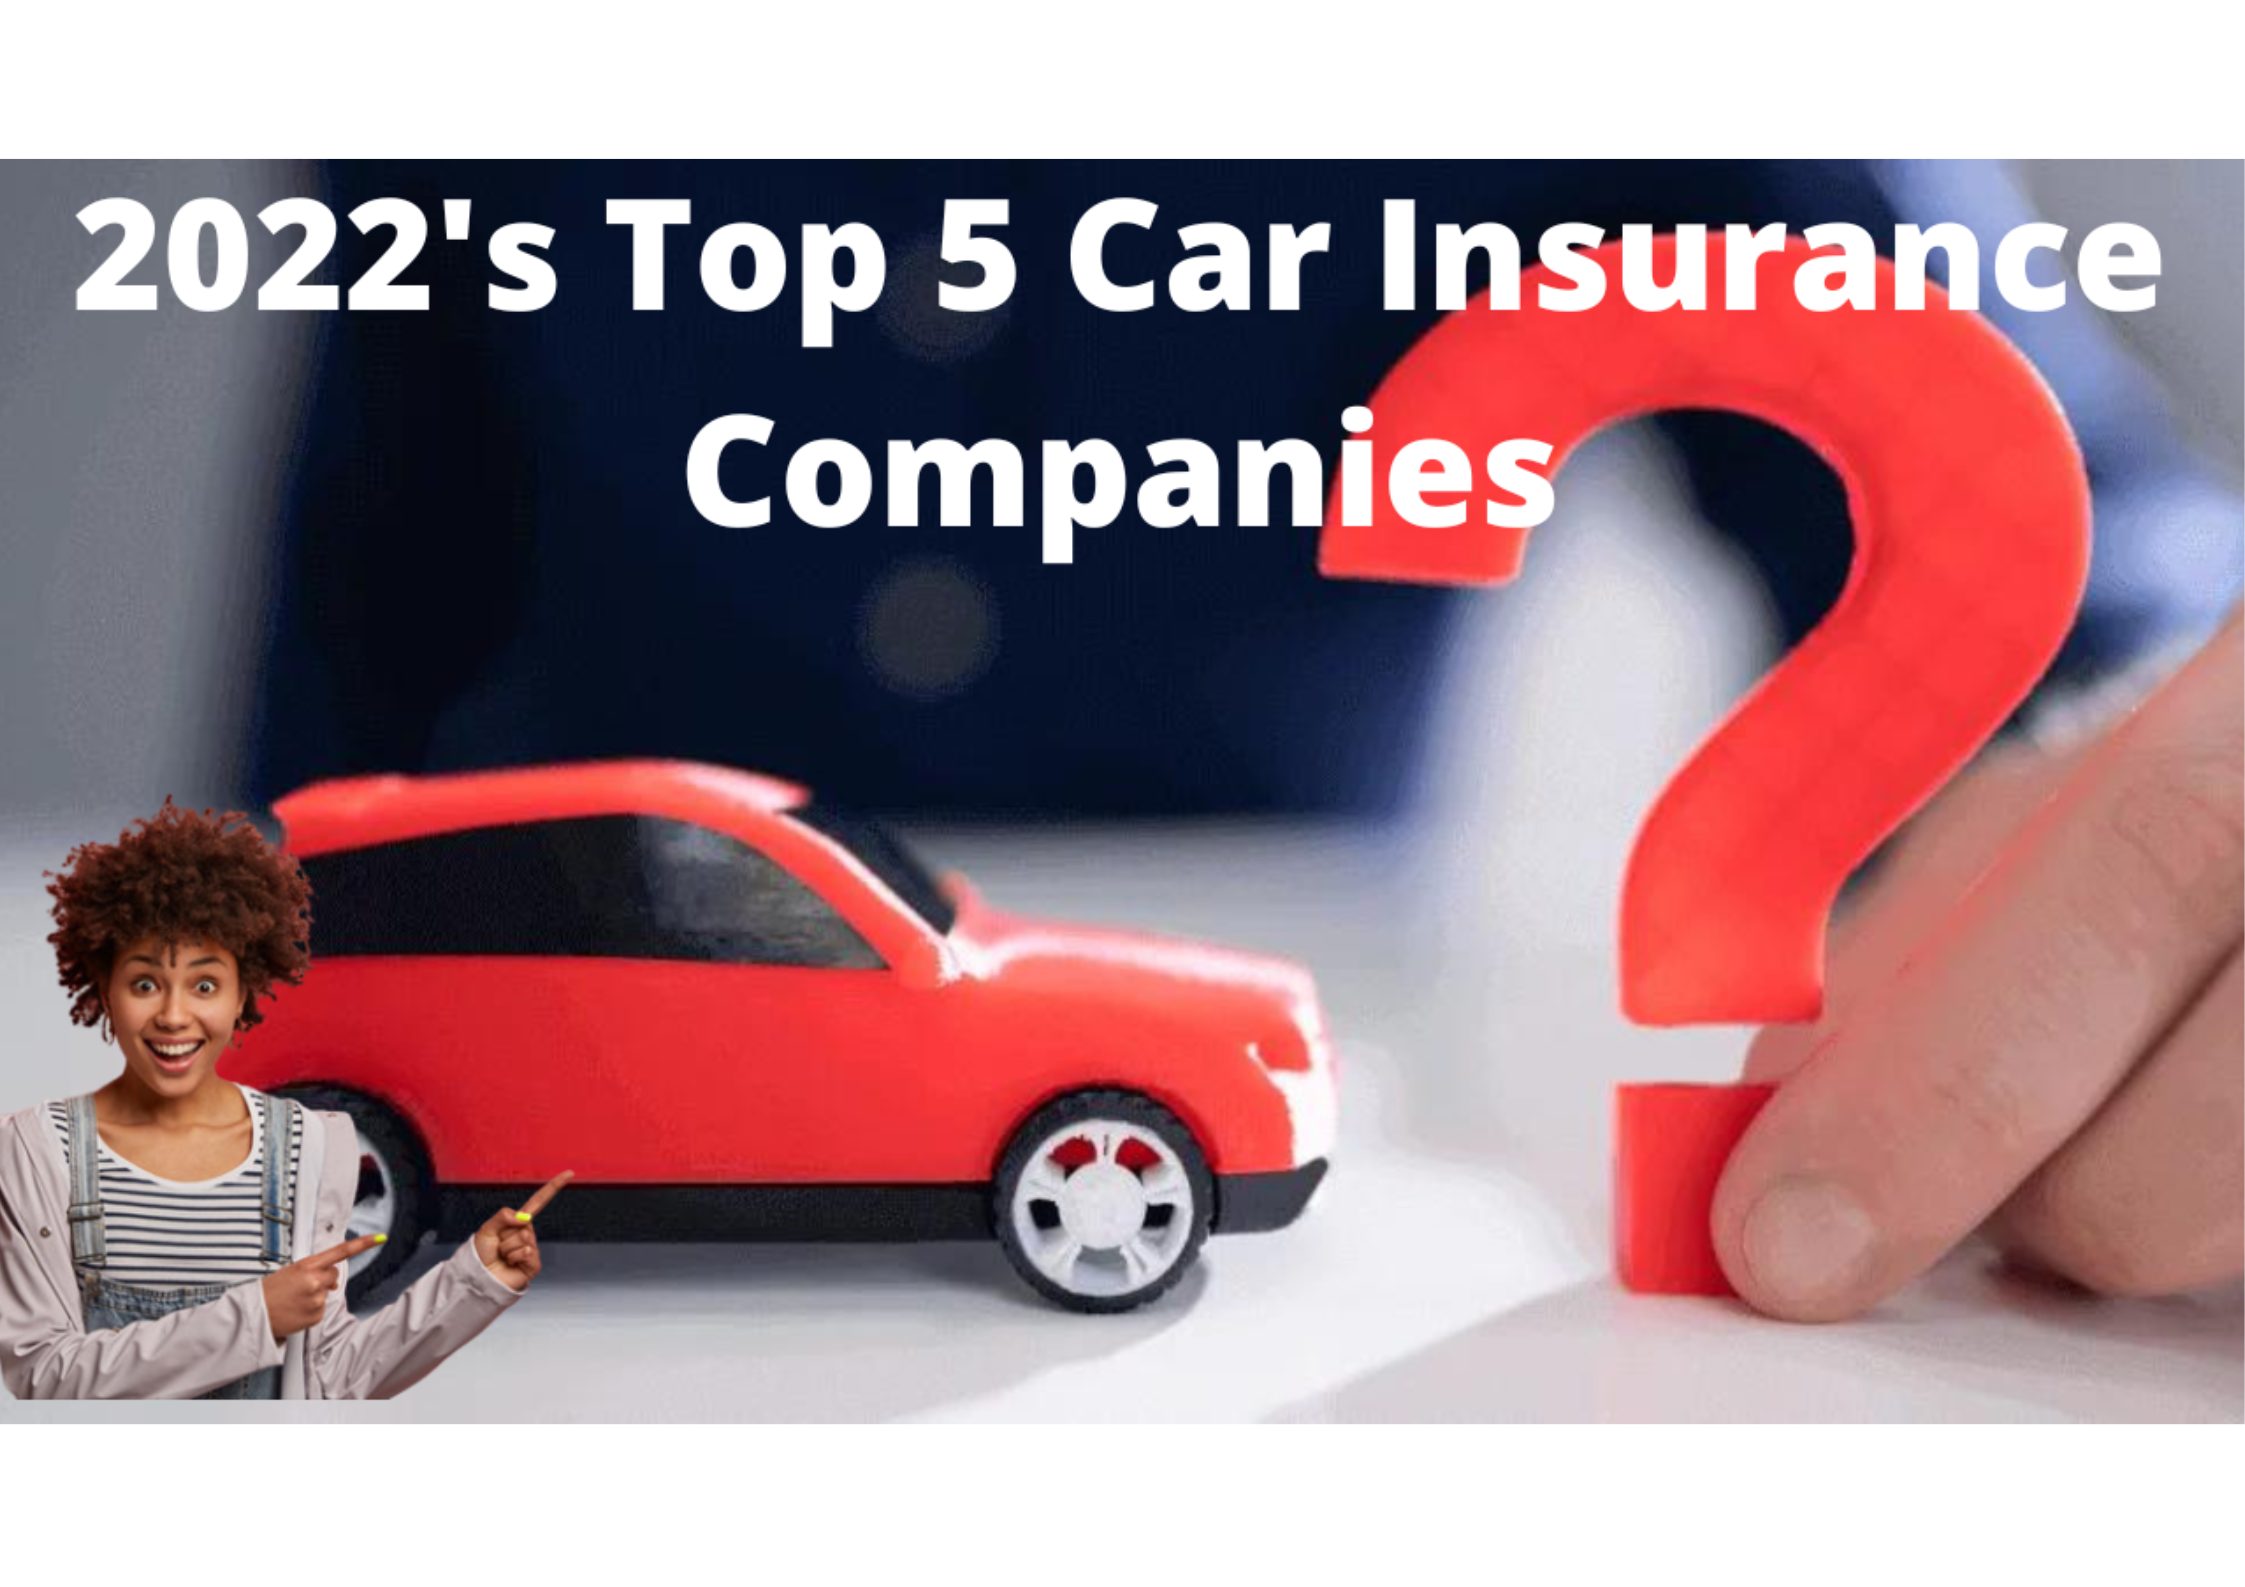 2022's Top 5 Car Insurance Companies